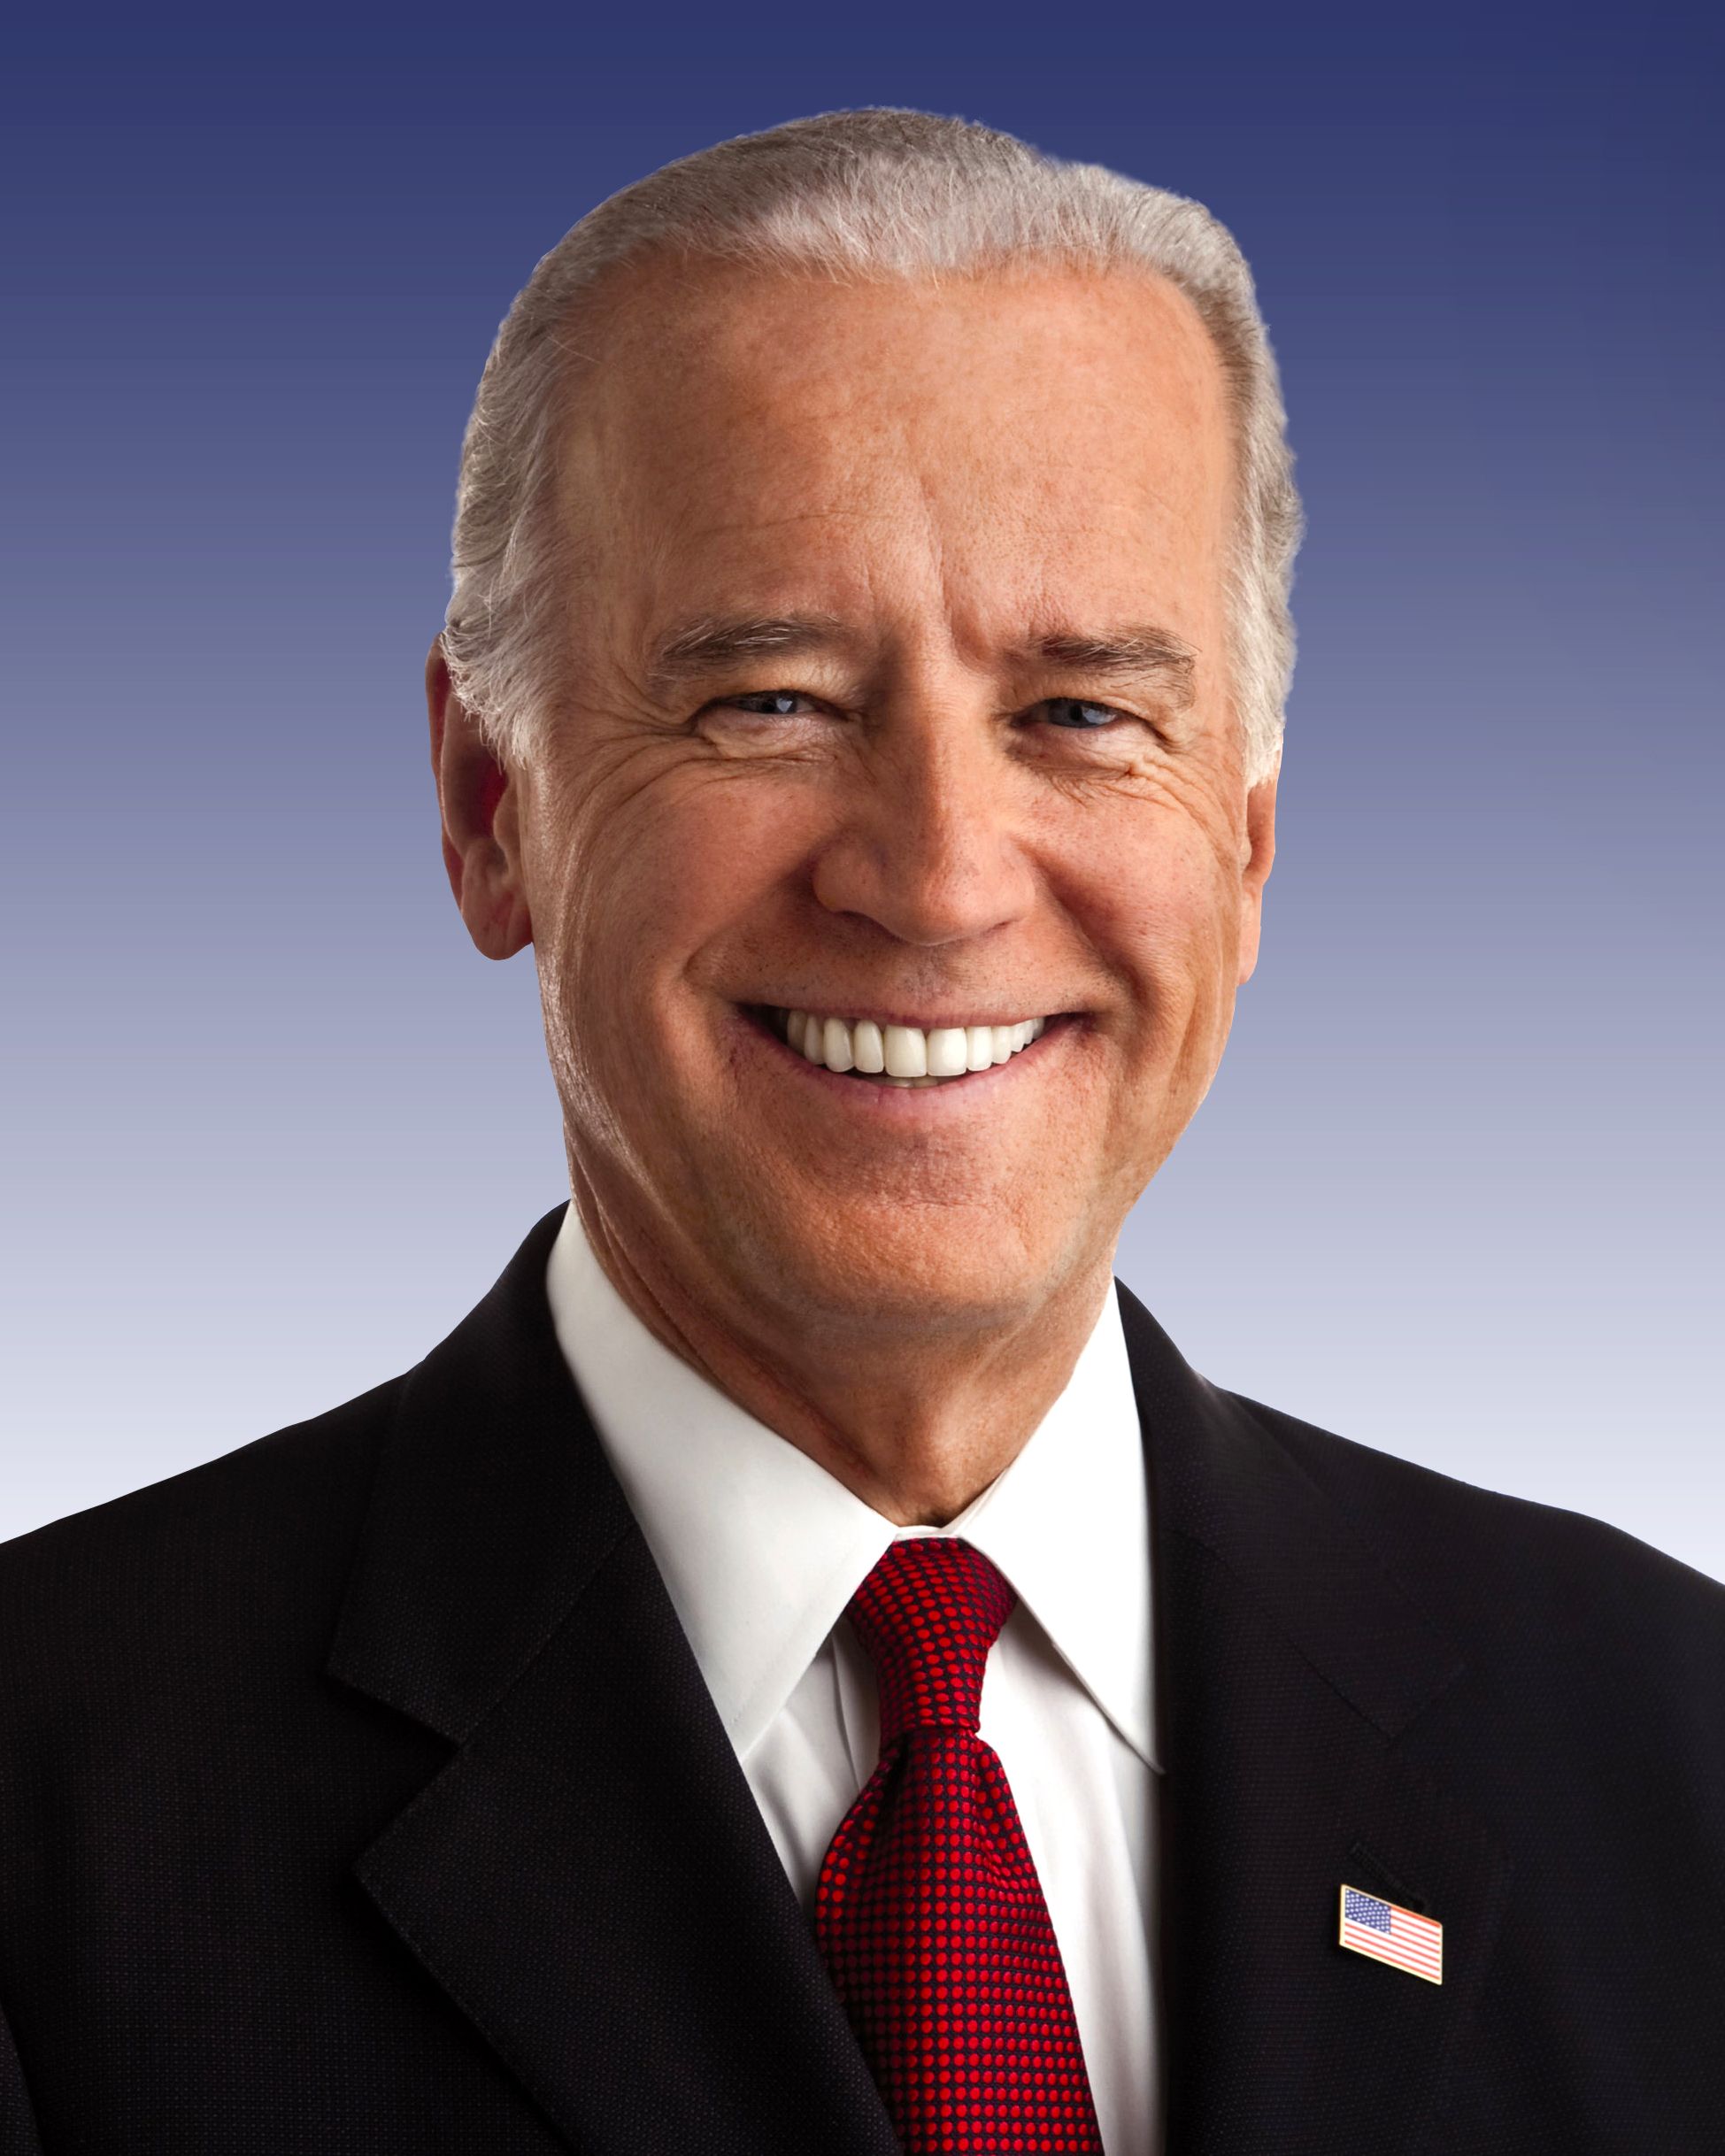 Joe Biden Wallpaper. Joe Biden Wallpaper, Hallie Biden Jewish Background and Young Joe Biden Wallpaper